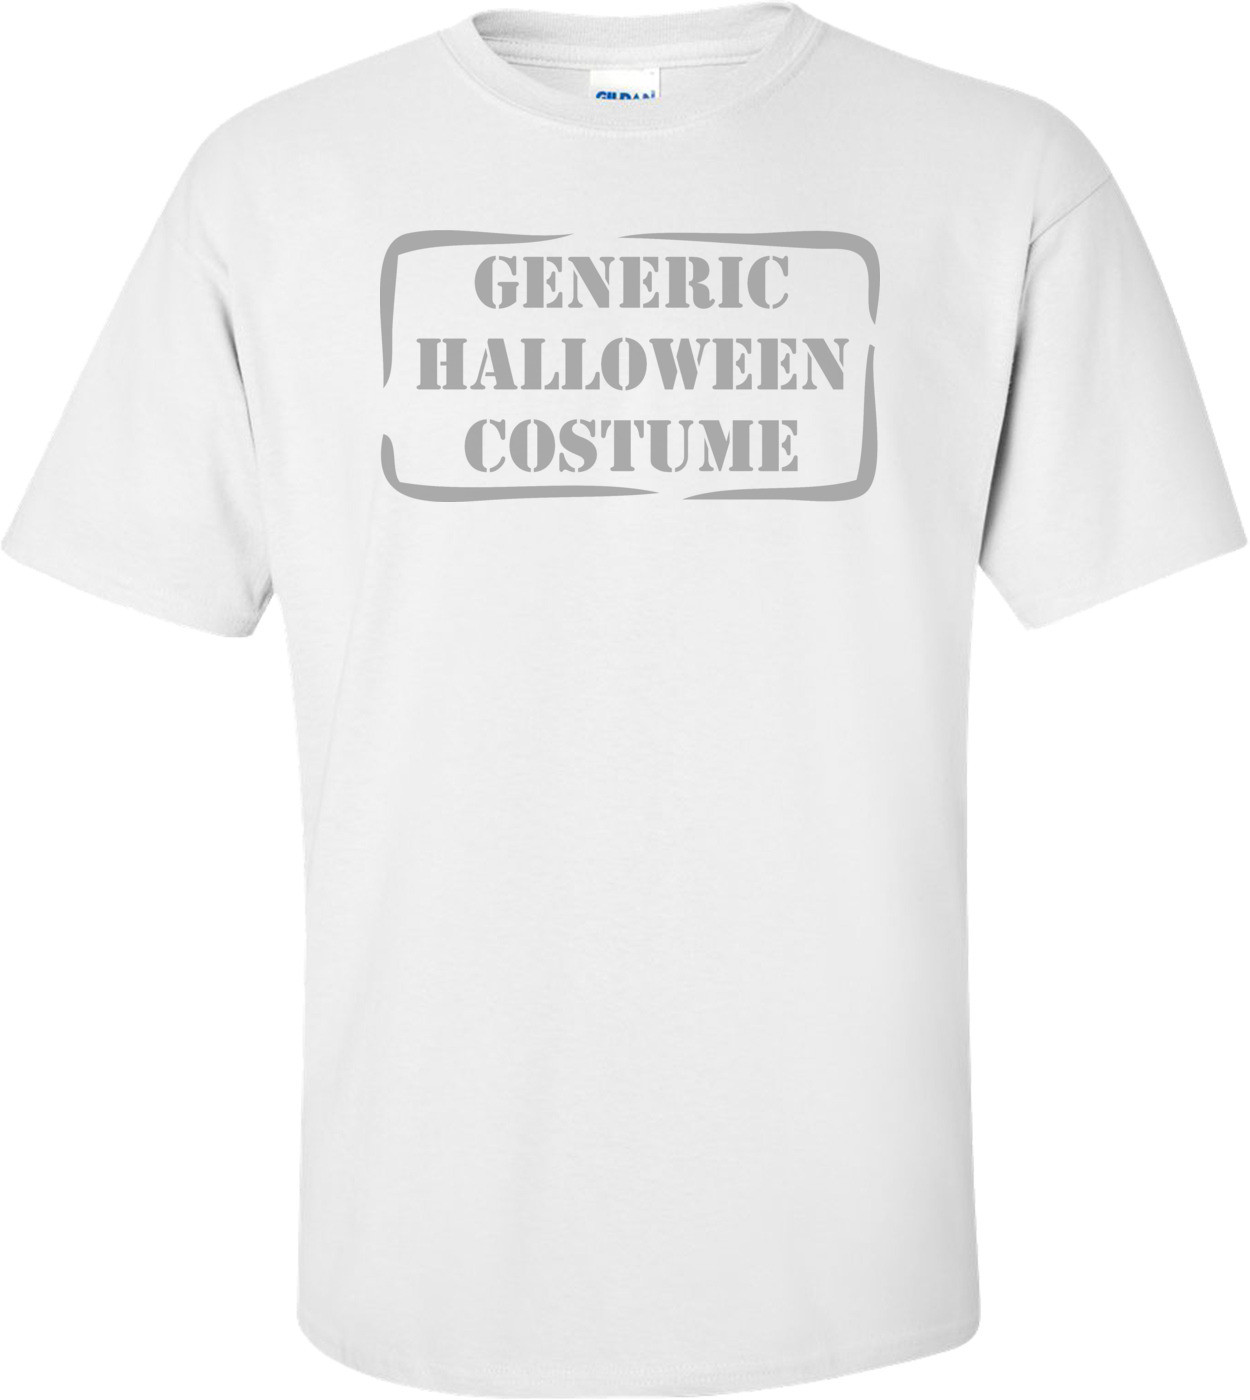 Generic Halloween Costume T-shirt